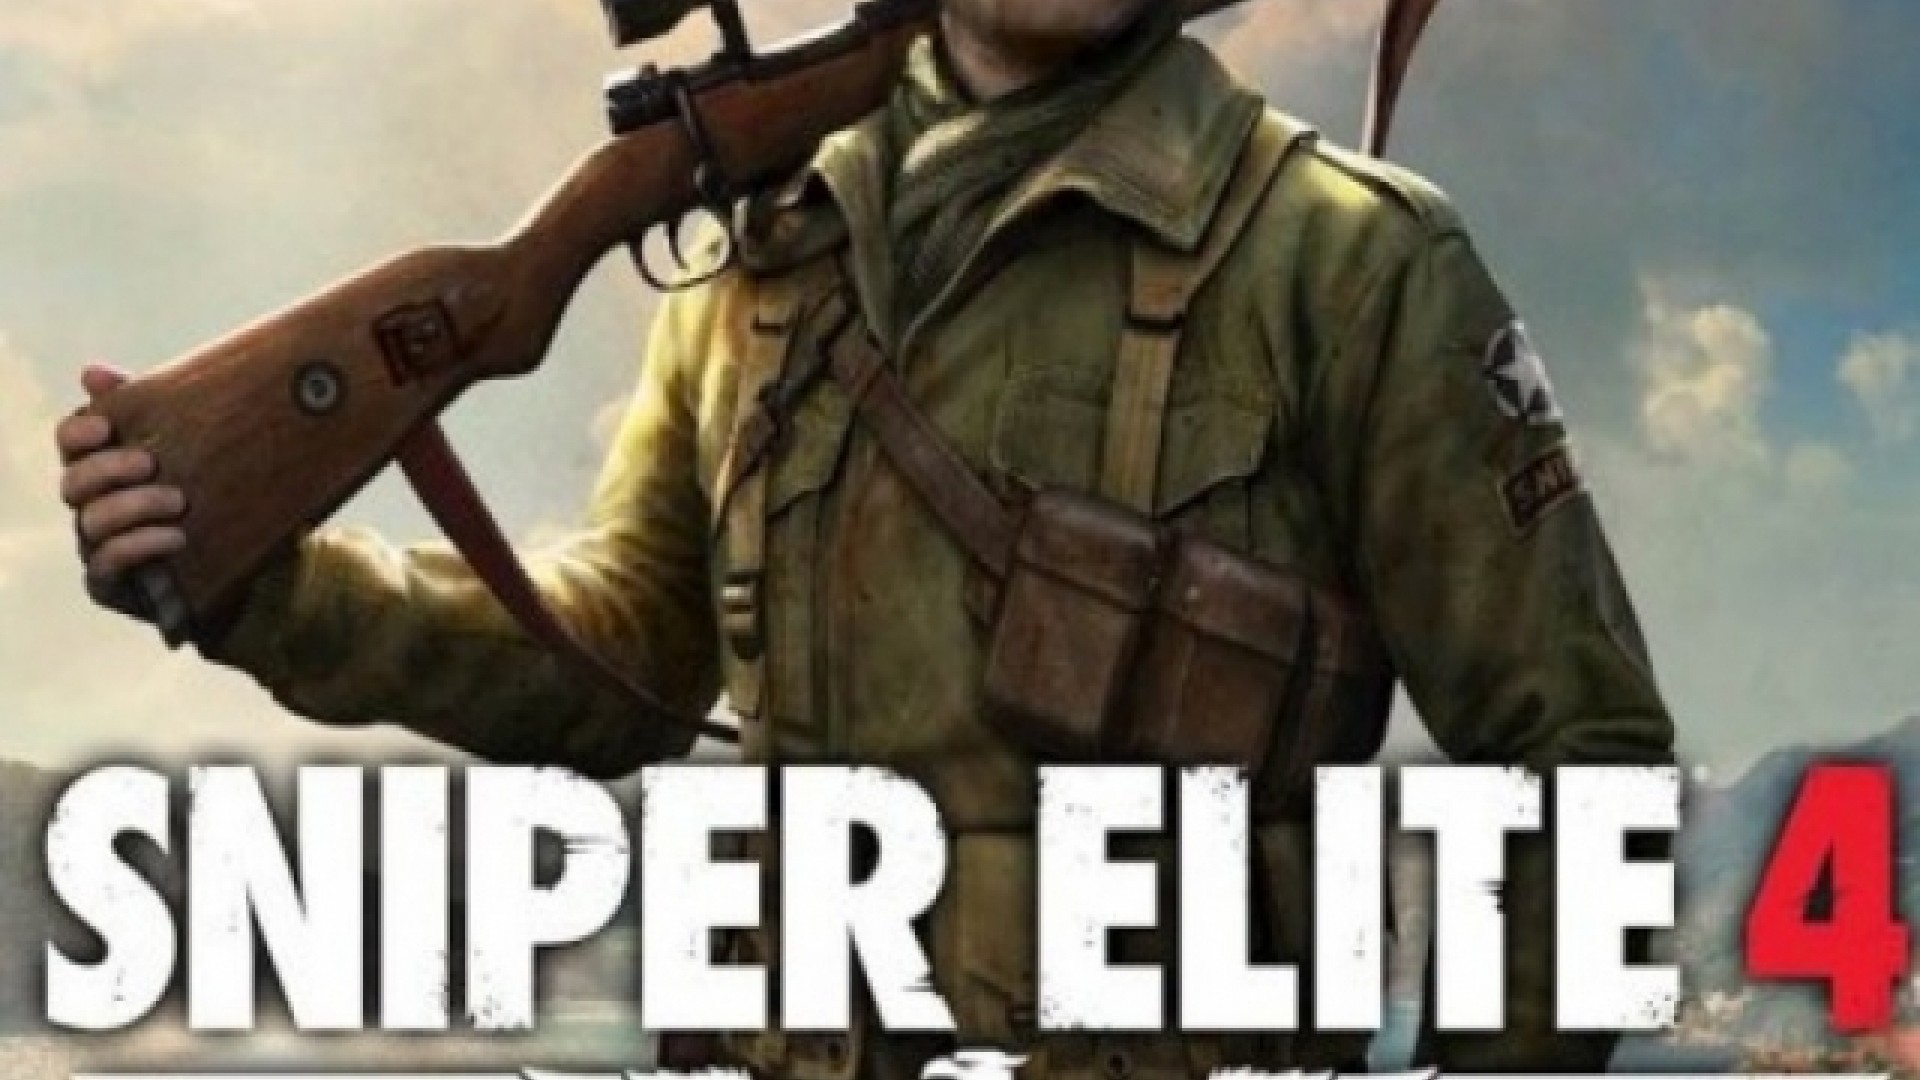 sniper elite 4 pc key free